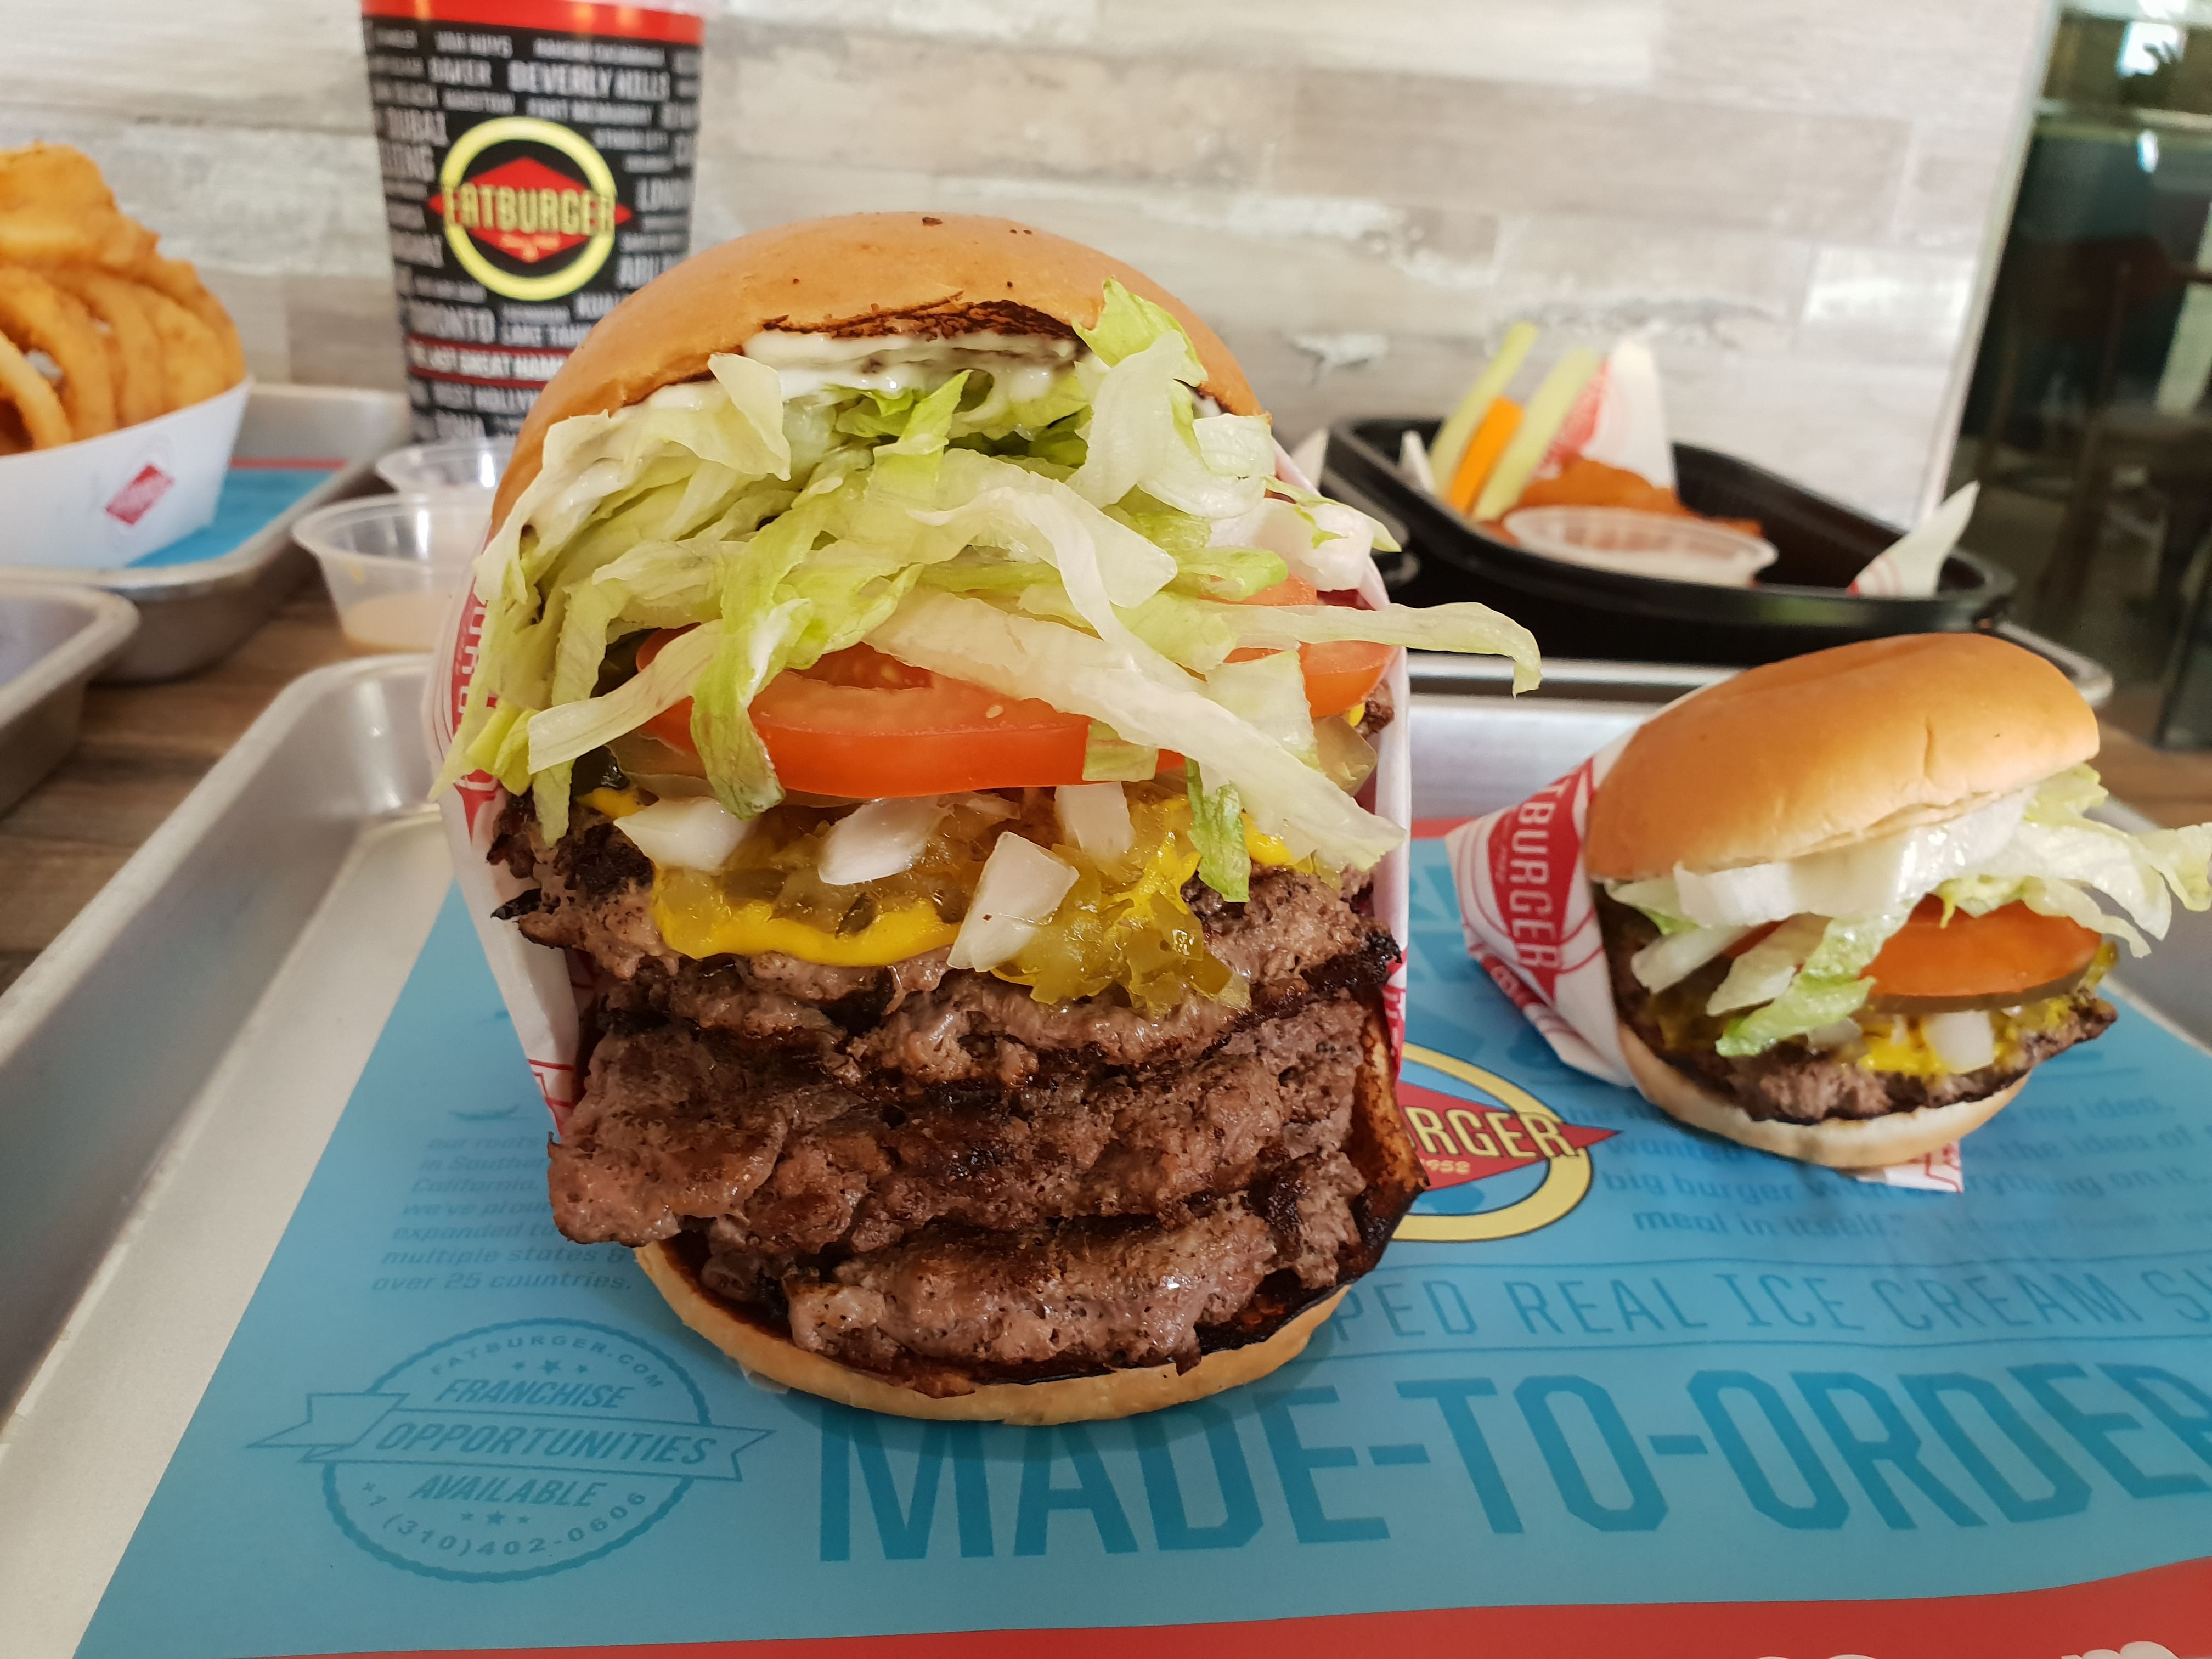 Fatburger's Quad Burger is a beef patty beast 